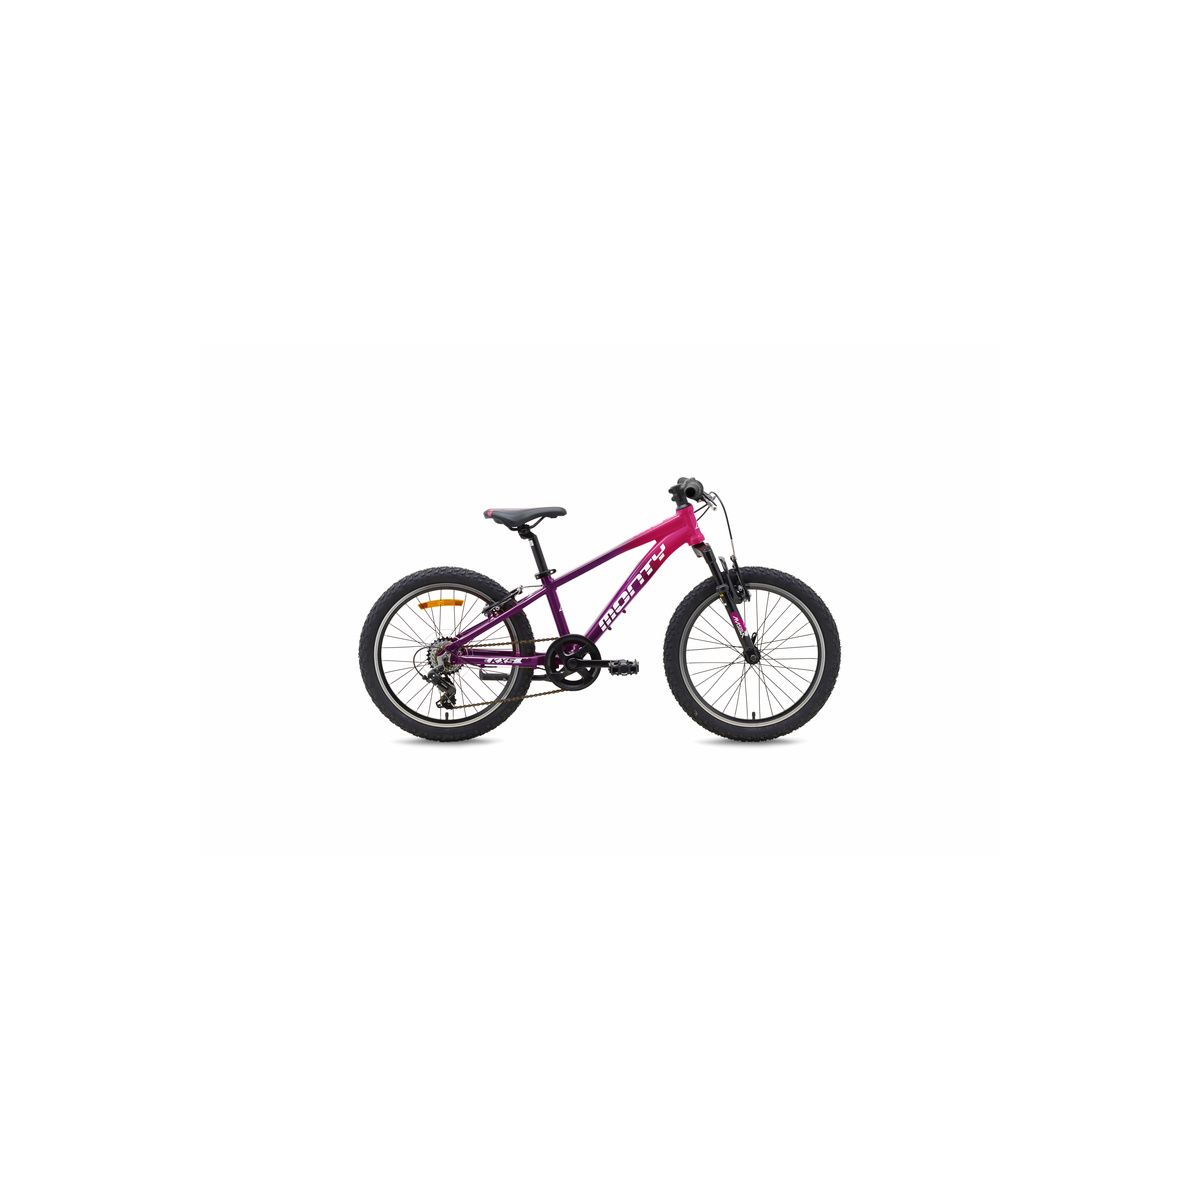 Bicicleta infantil PARA NIÑA Monty KX5 20" (5 a 7 años) COLOR ROSA VIOLETA | MARESME | MATARÓ | THE BIKE VILLAGE